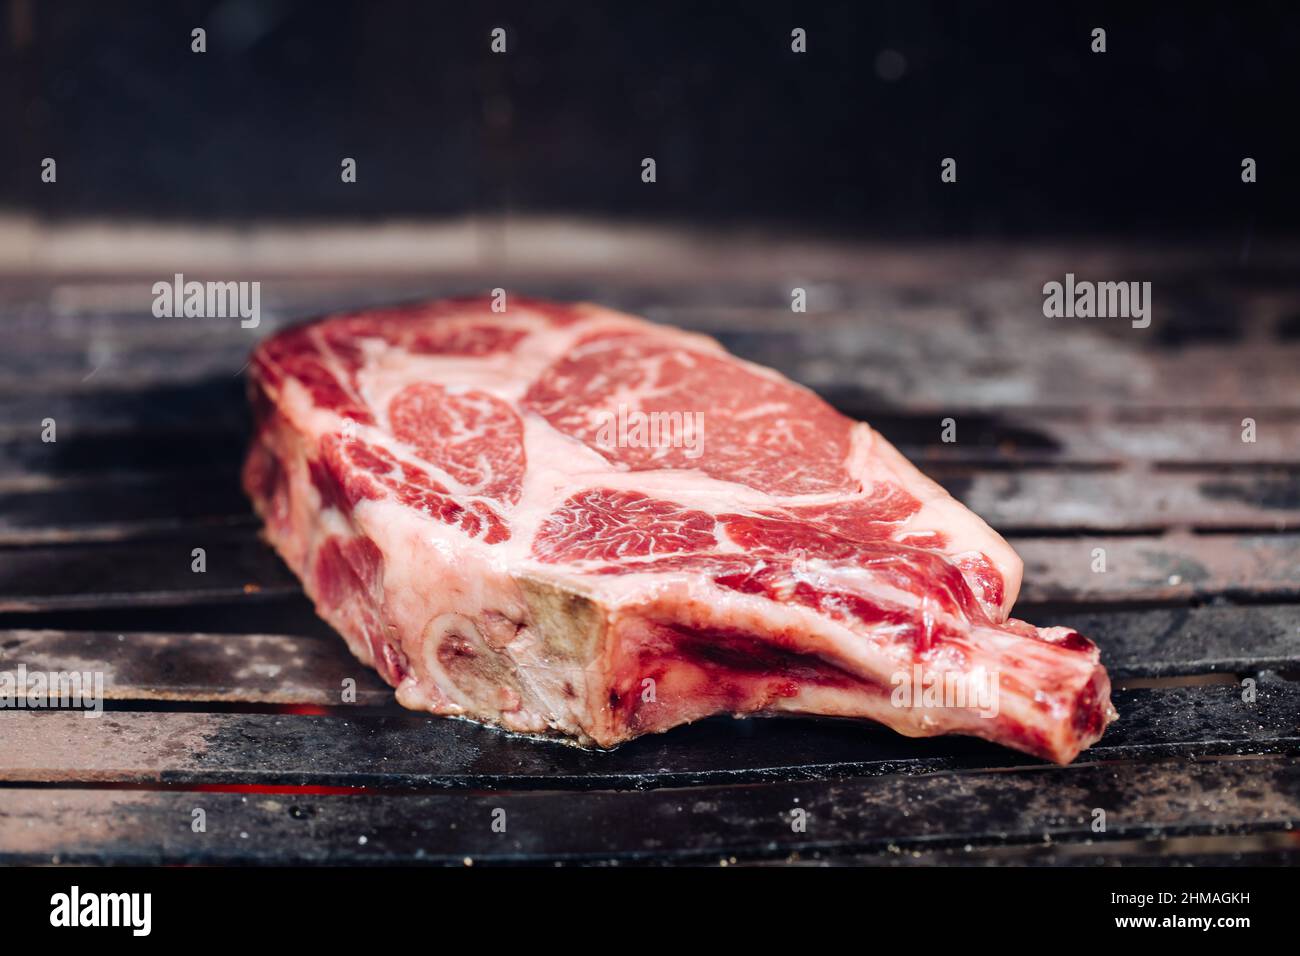 Various steak selection including rib eye, t-bone, fillet steak and rump steak. Tenderloin and sirloin cuts. Organic dry aged beef. Stock Photo